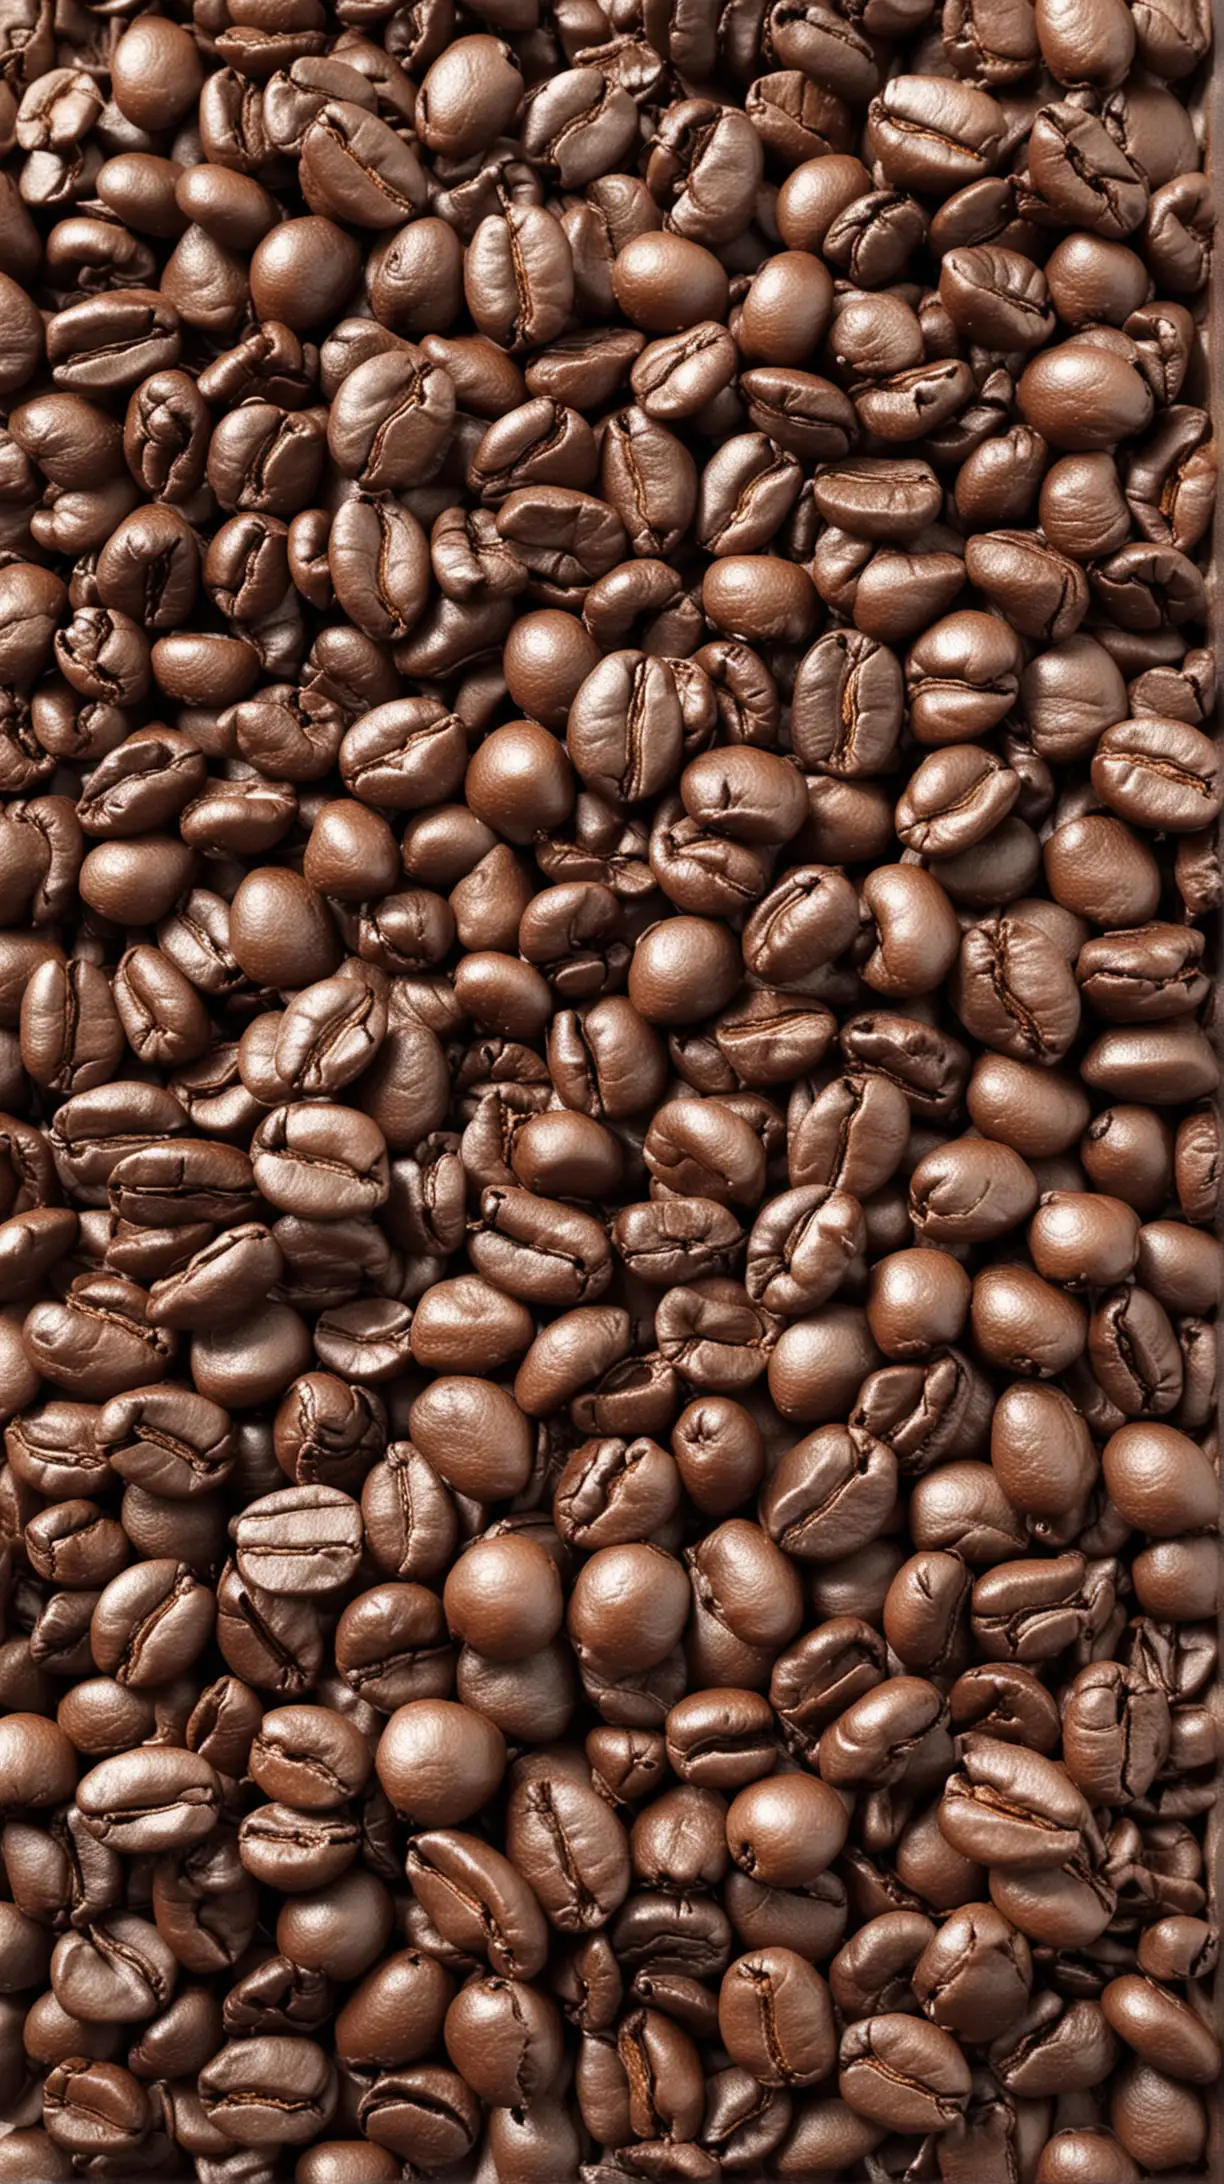 Abundance of Coffee Beans